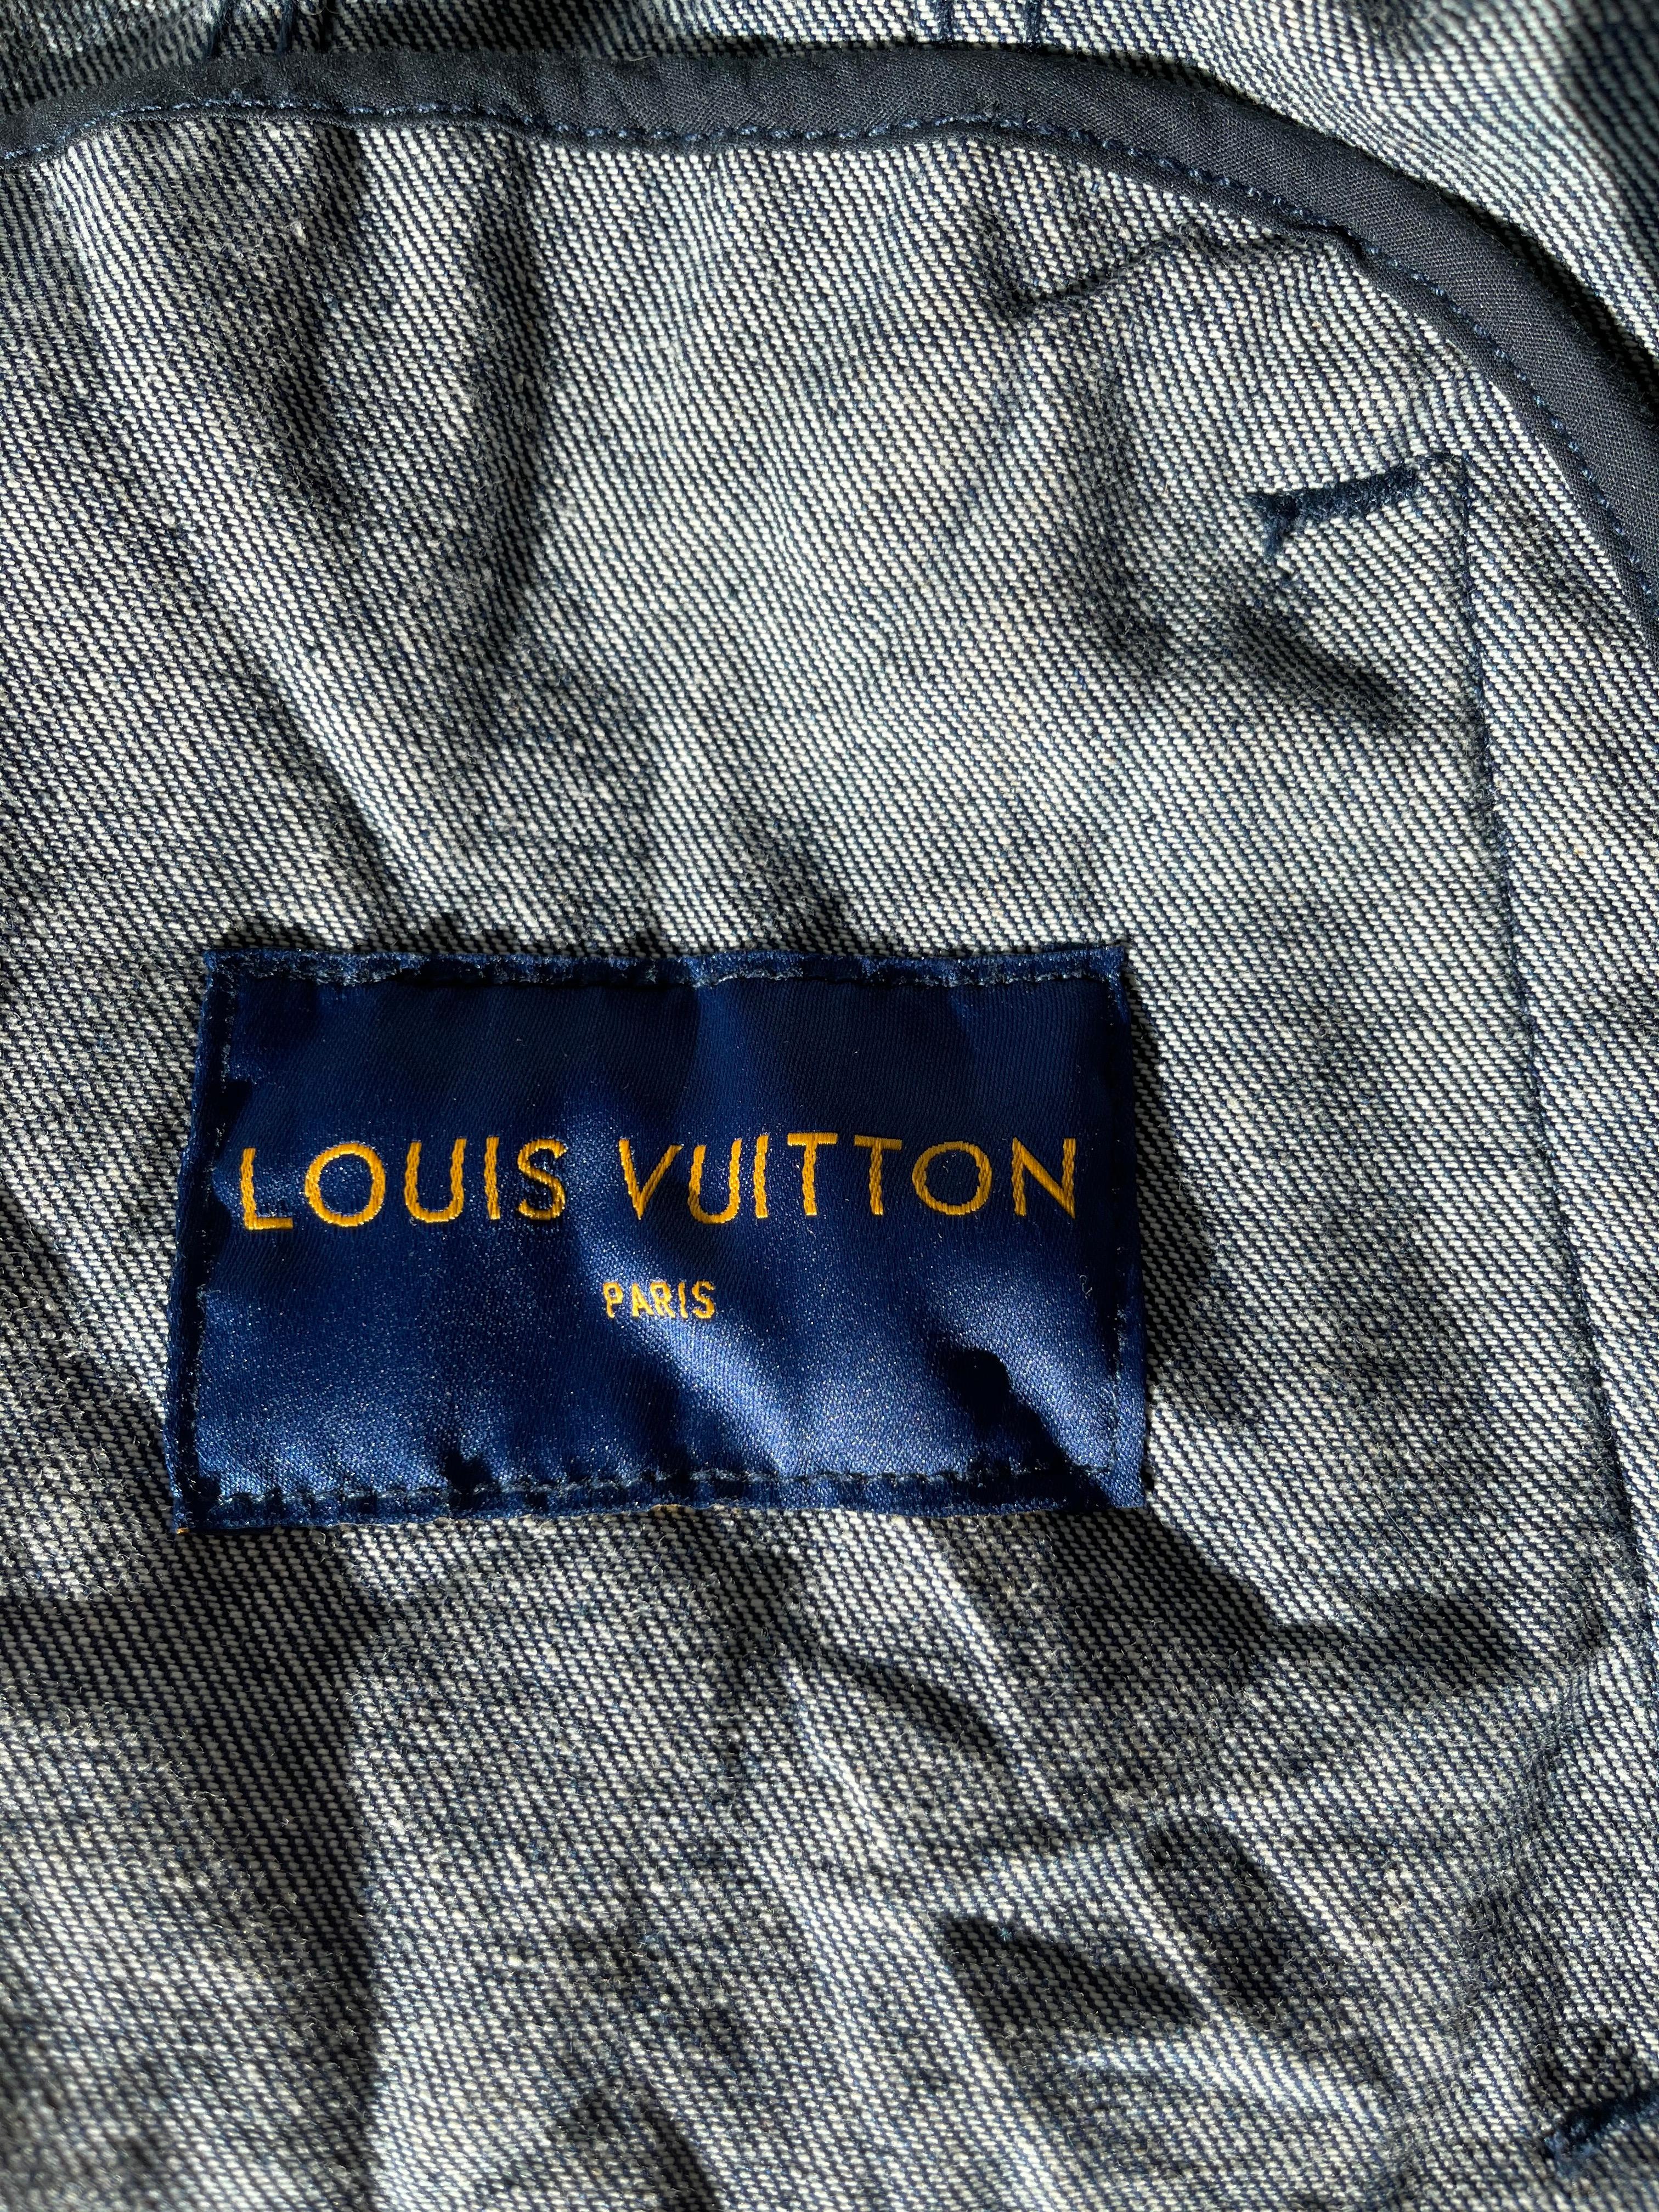  Louis Vuitton Kim Jones Monogram Denim Jacket (Large) Unisexe 